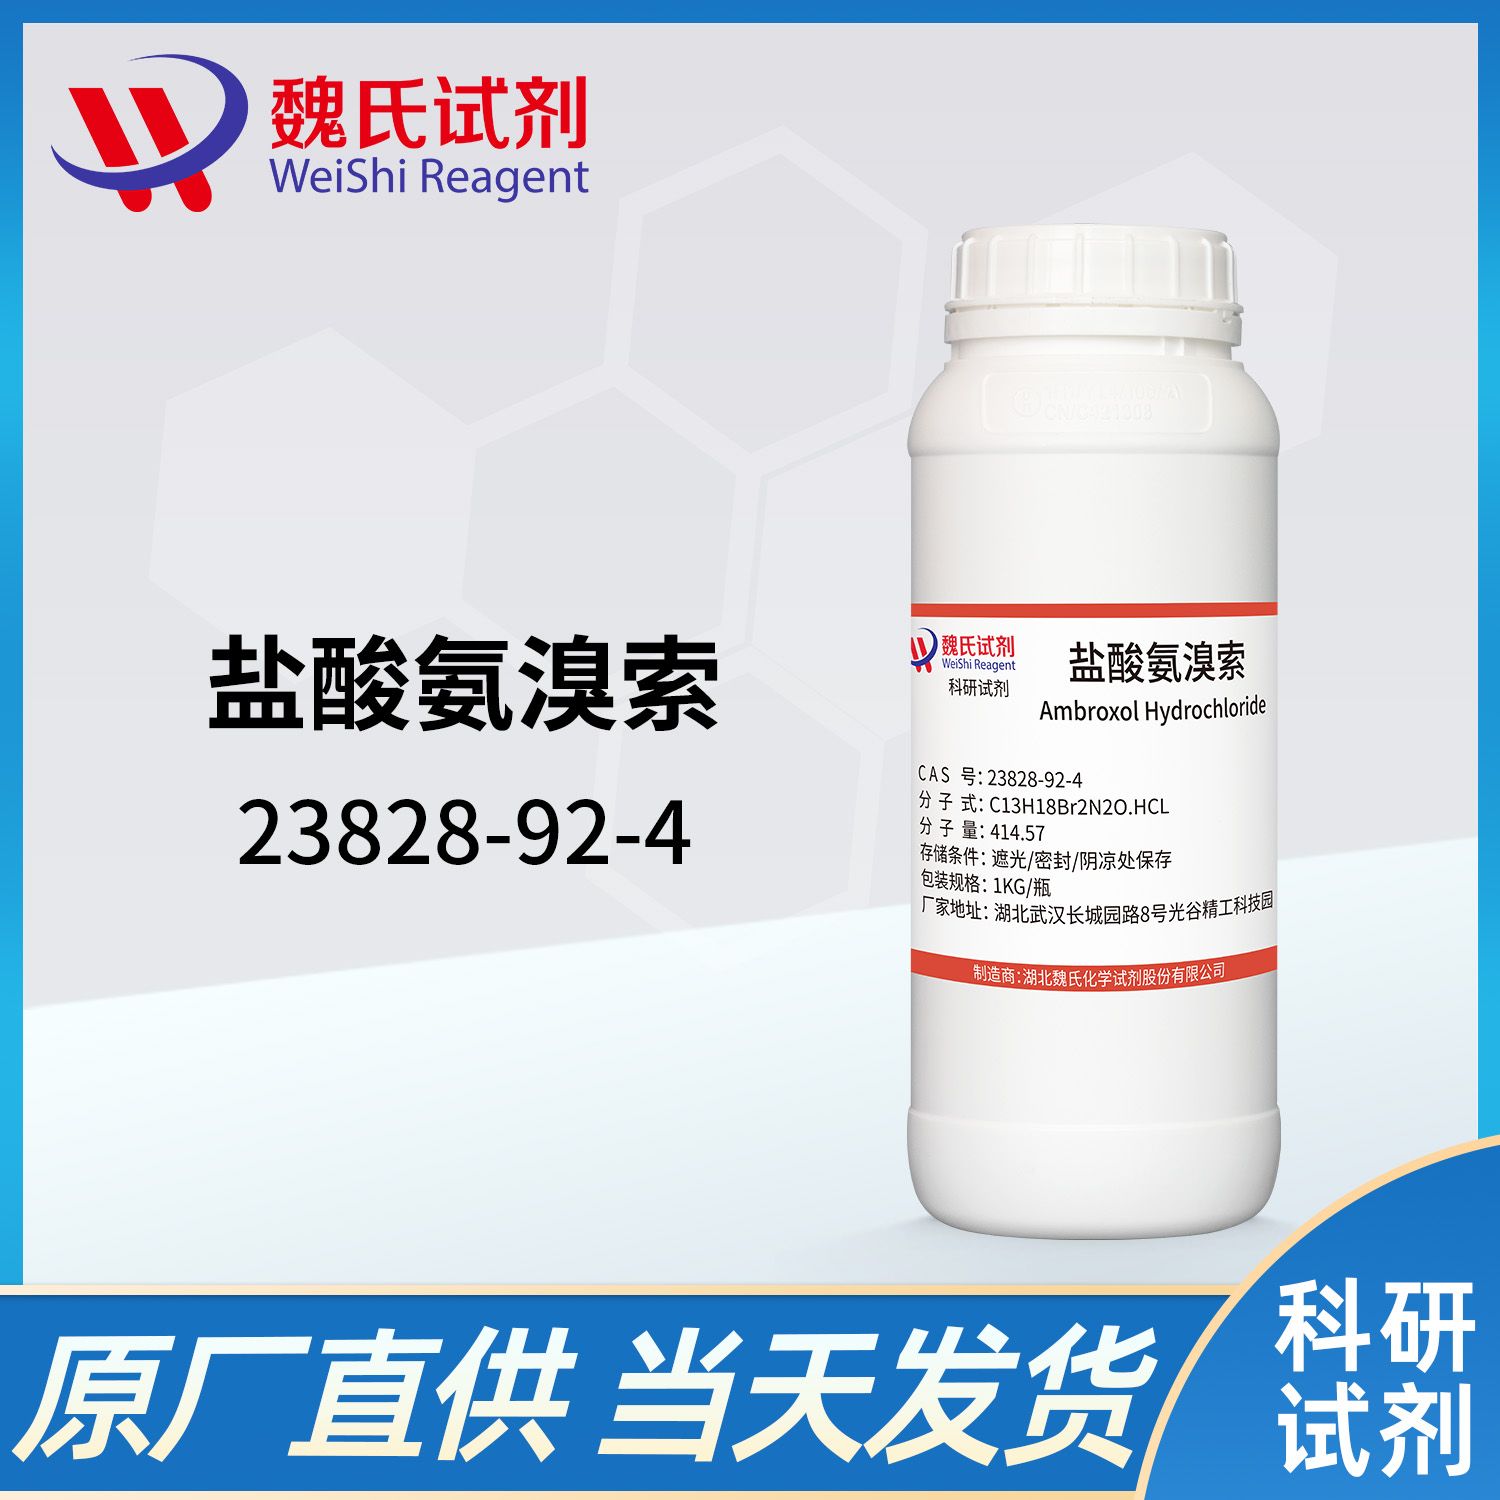 23828-92-4 /盐酸氨溴索/Ambroxol hydrochloride